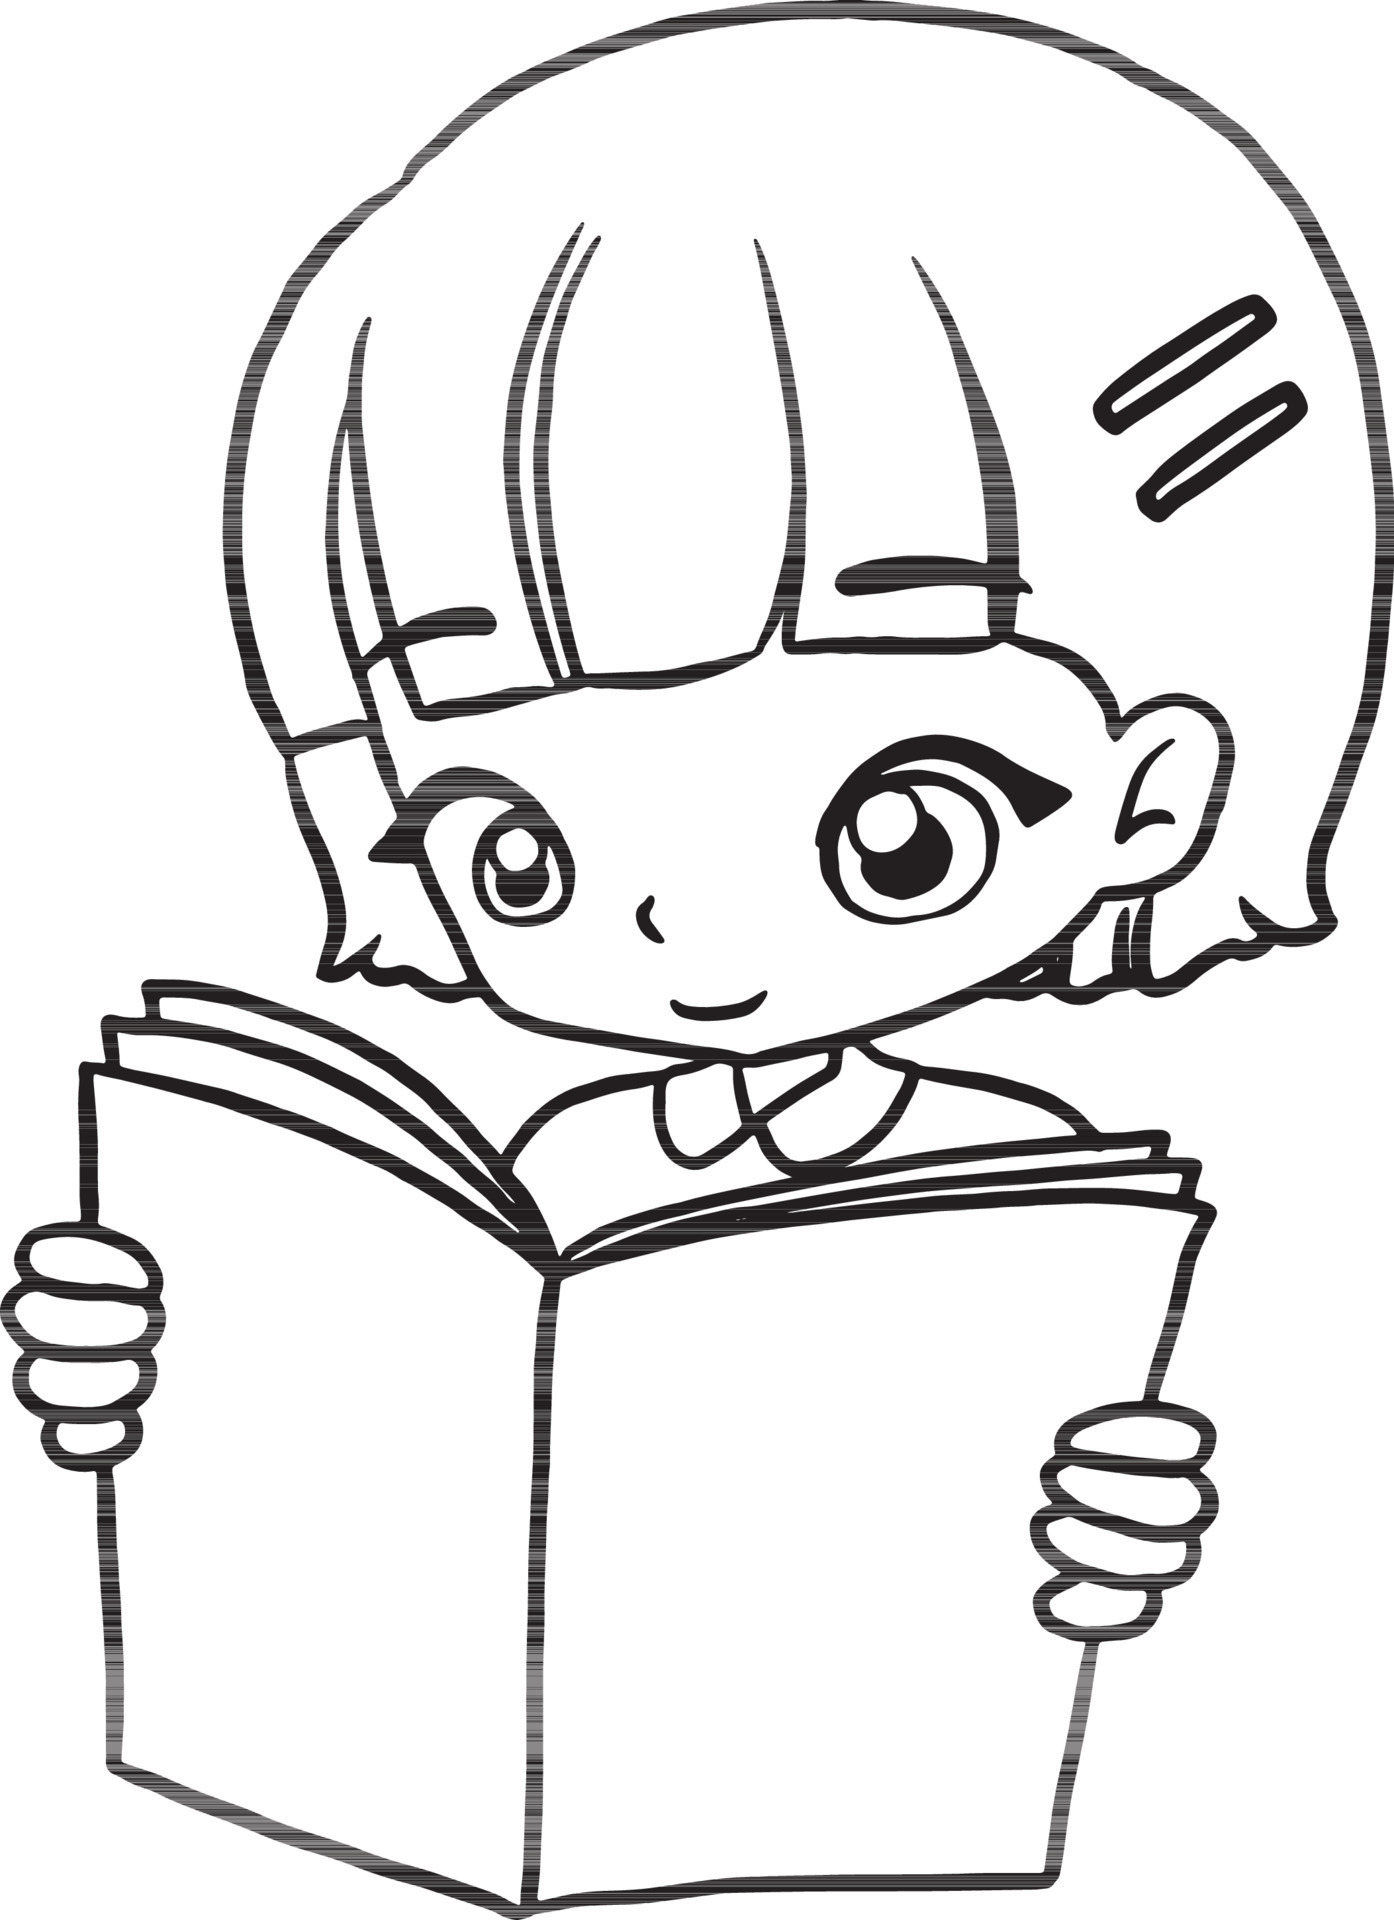 How to Draw a Notebook | Cute and Easy Drawing | Dibujos de libros  animados, Imagenes de libros animados, Libros animados